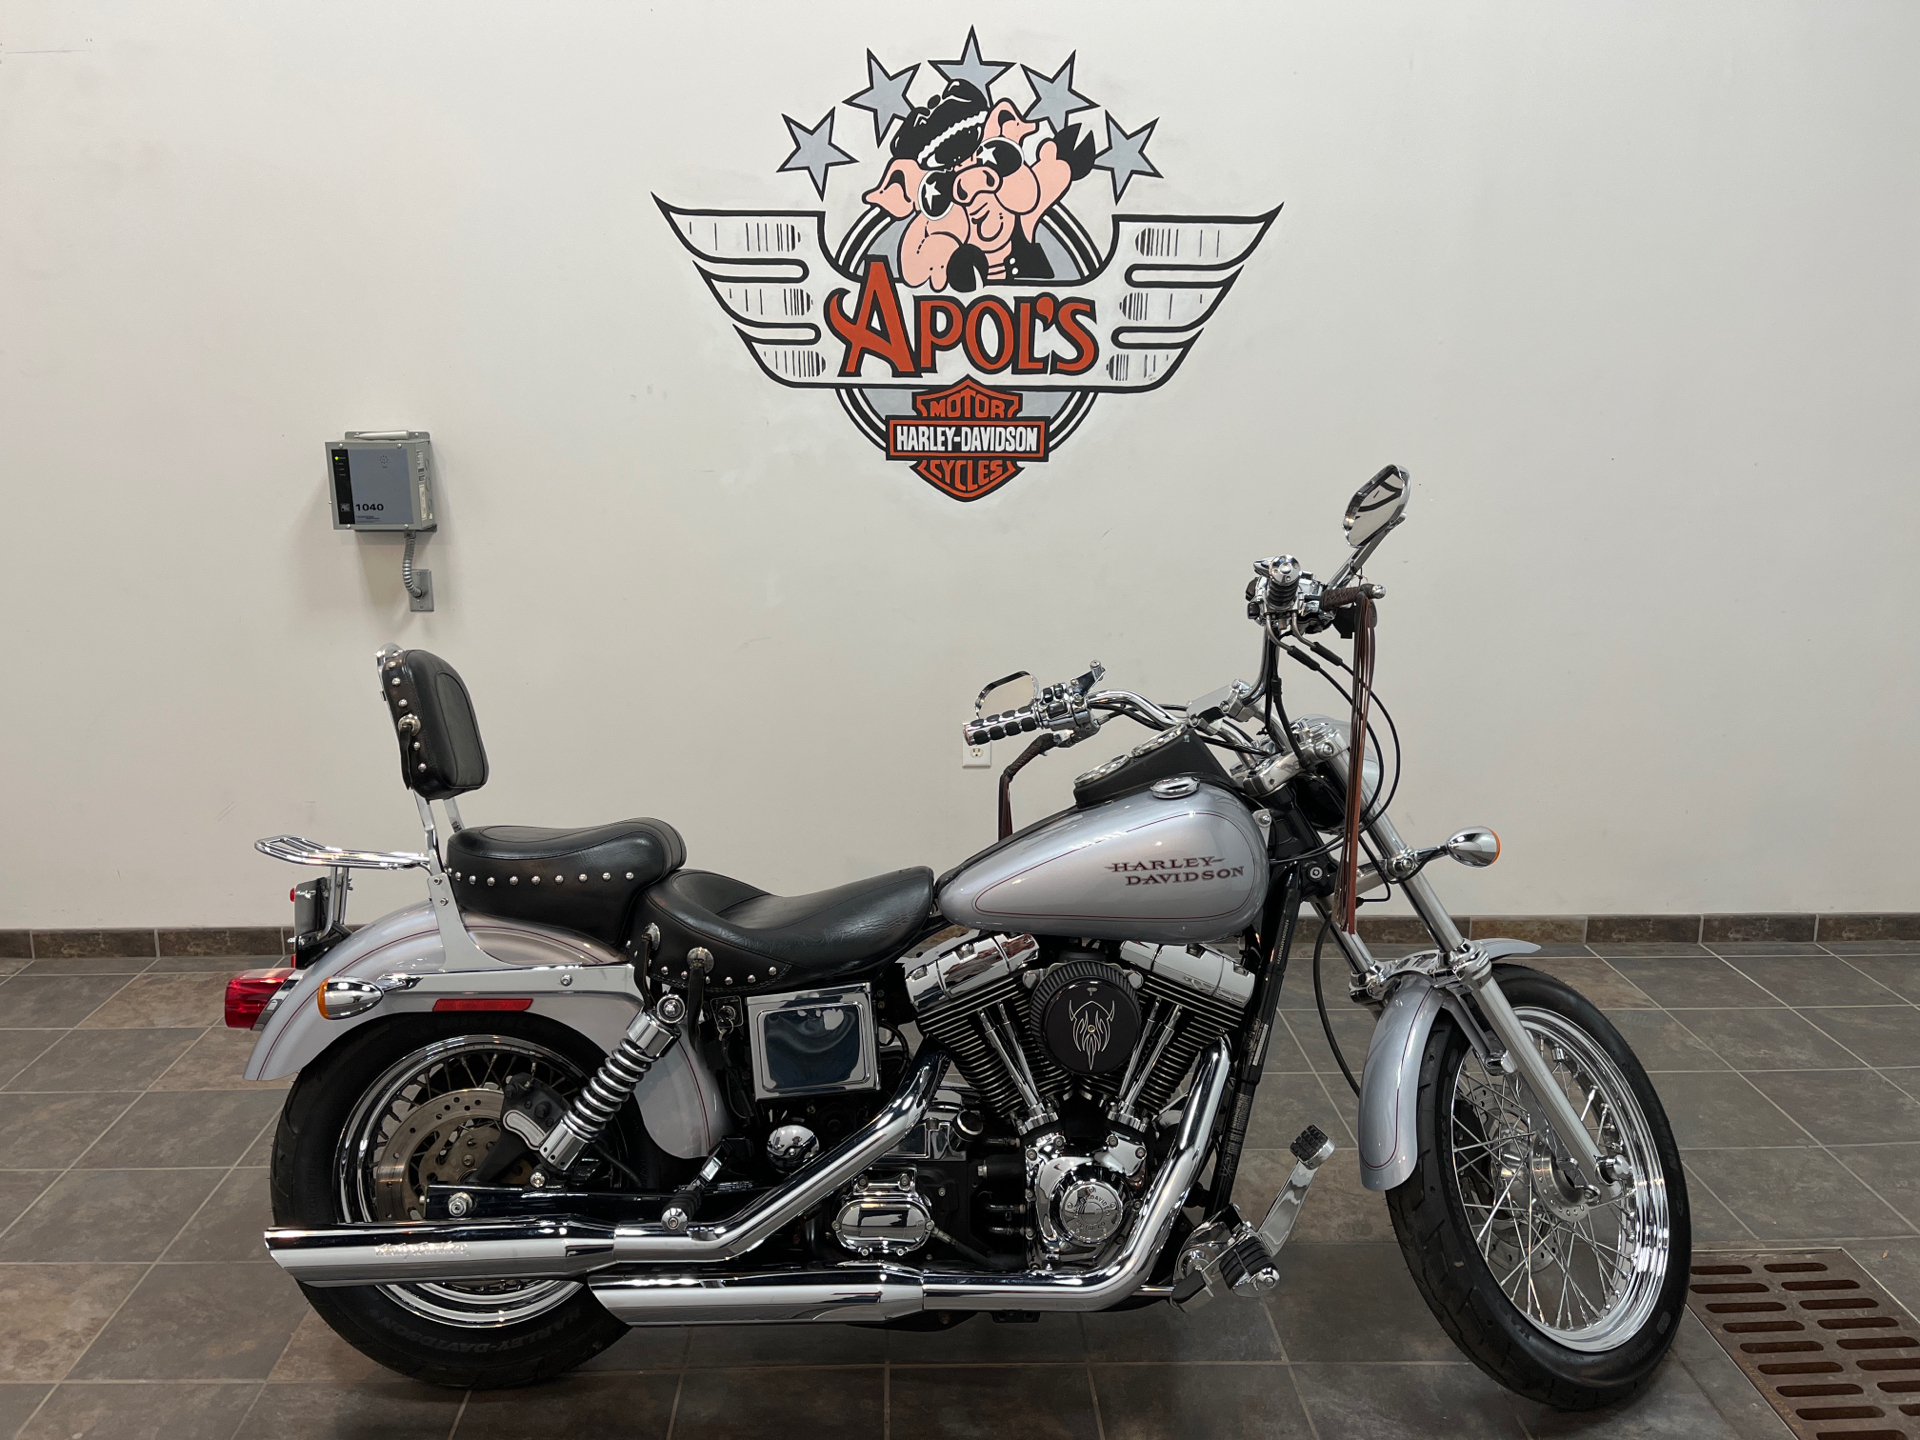 2002 Harley-Davidson FXDL  Dyna Low Rider® in Alexandria, Minnesota - Photo 1